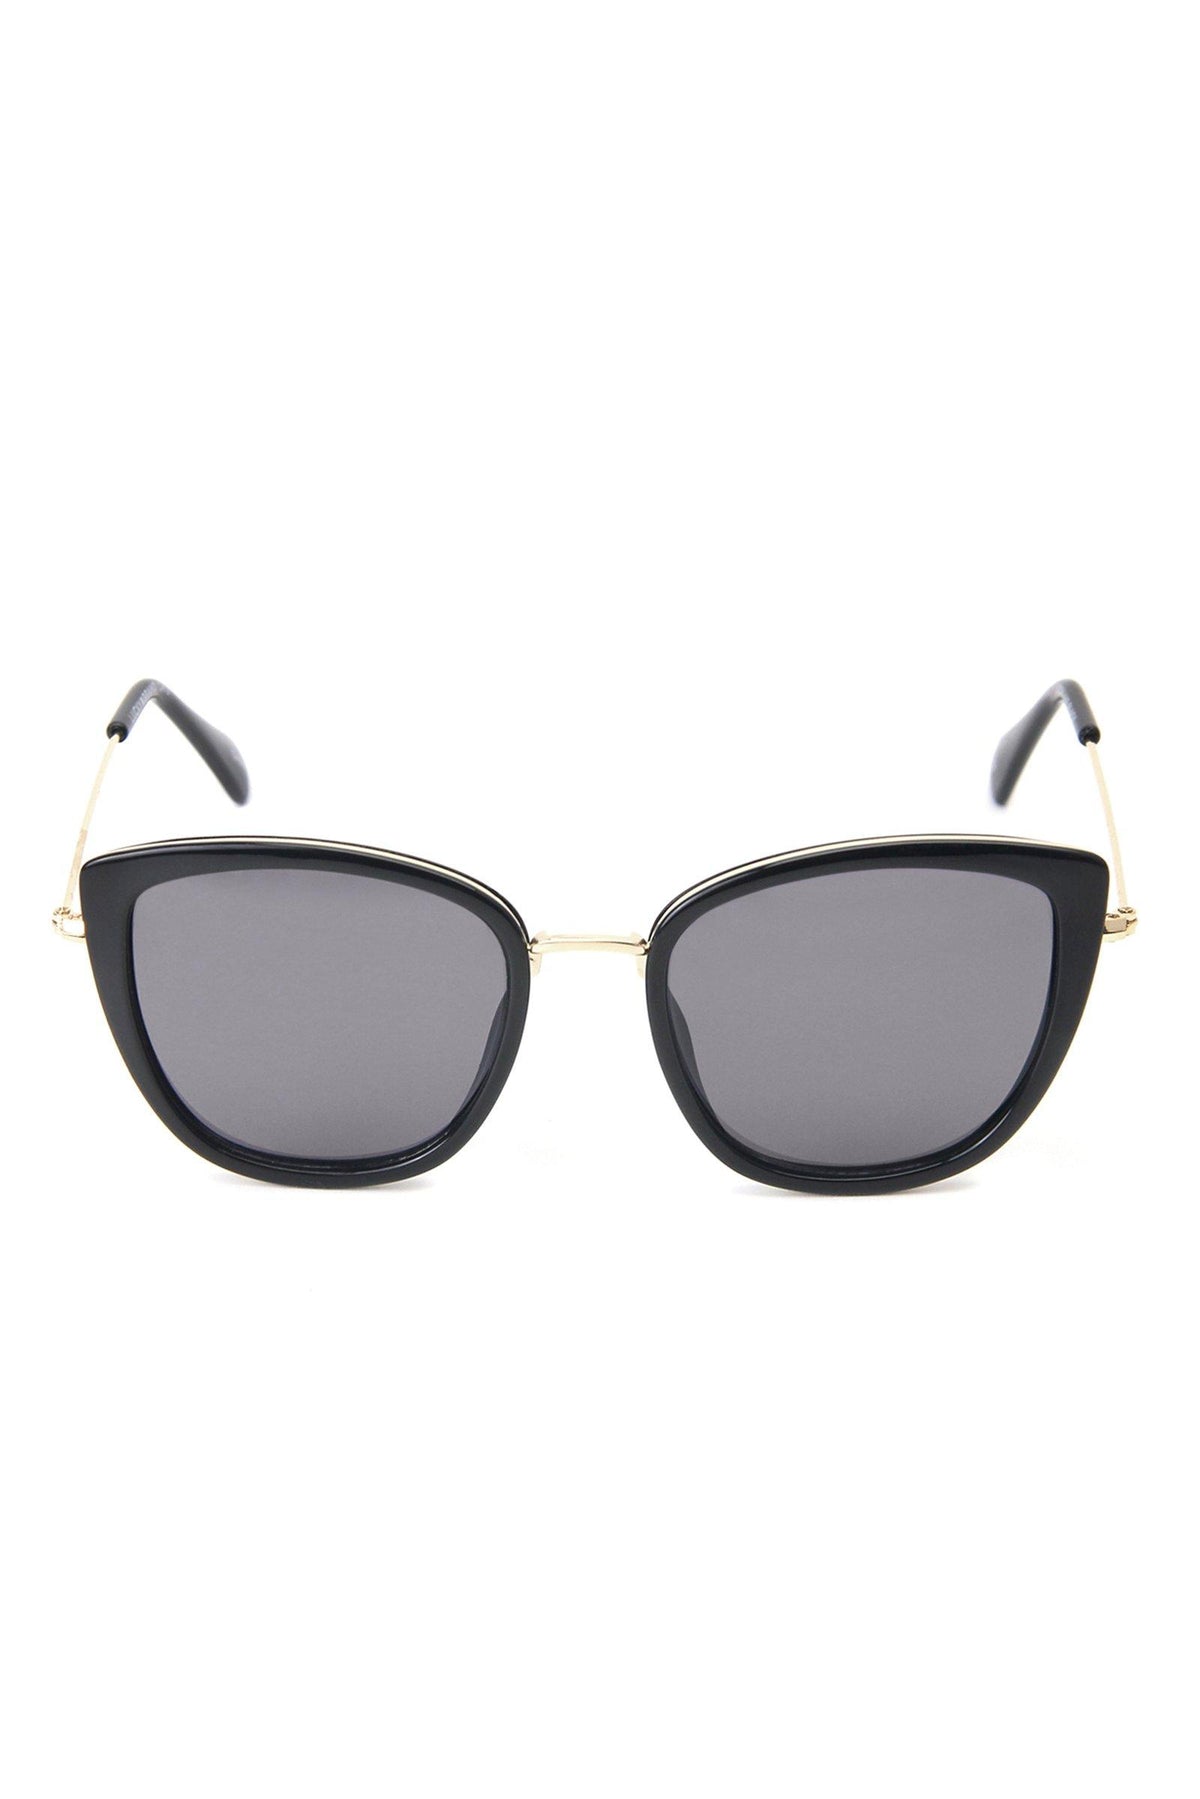 Lucky Brand Trinity Sunglasses - Women's Ladies Accessories Sunglasses Black